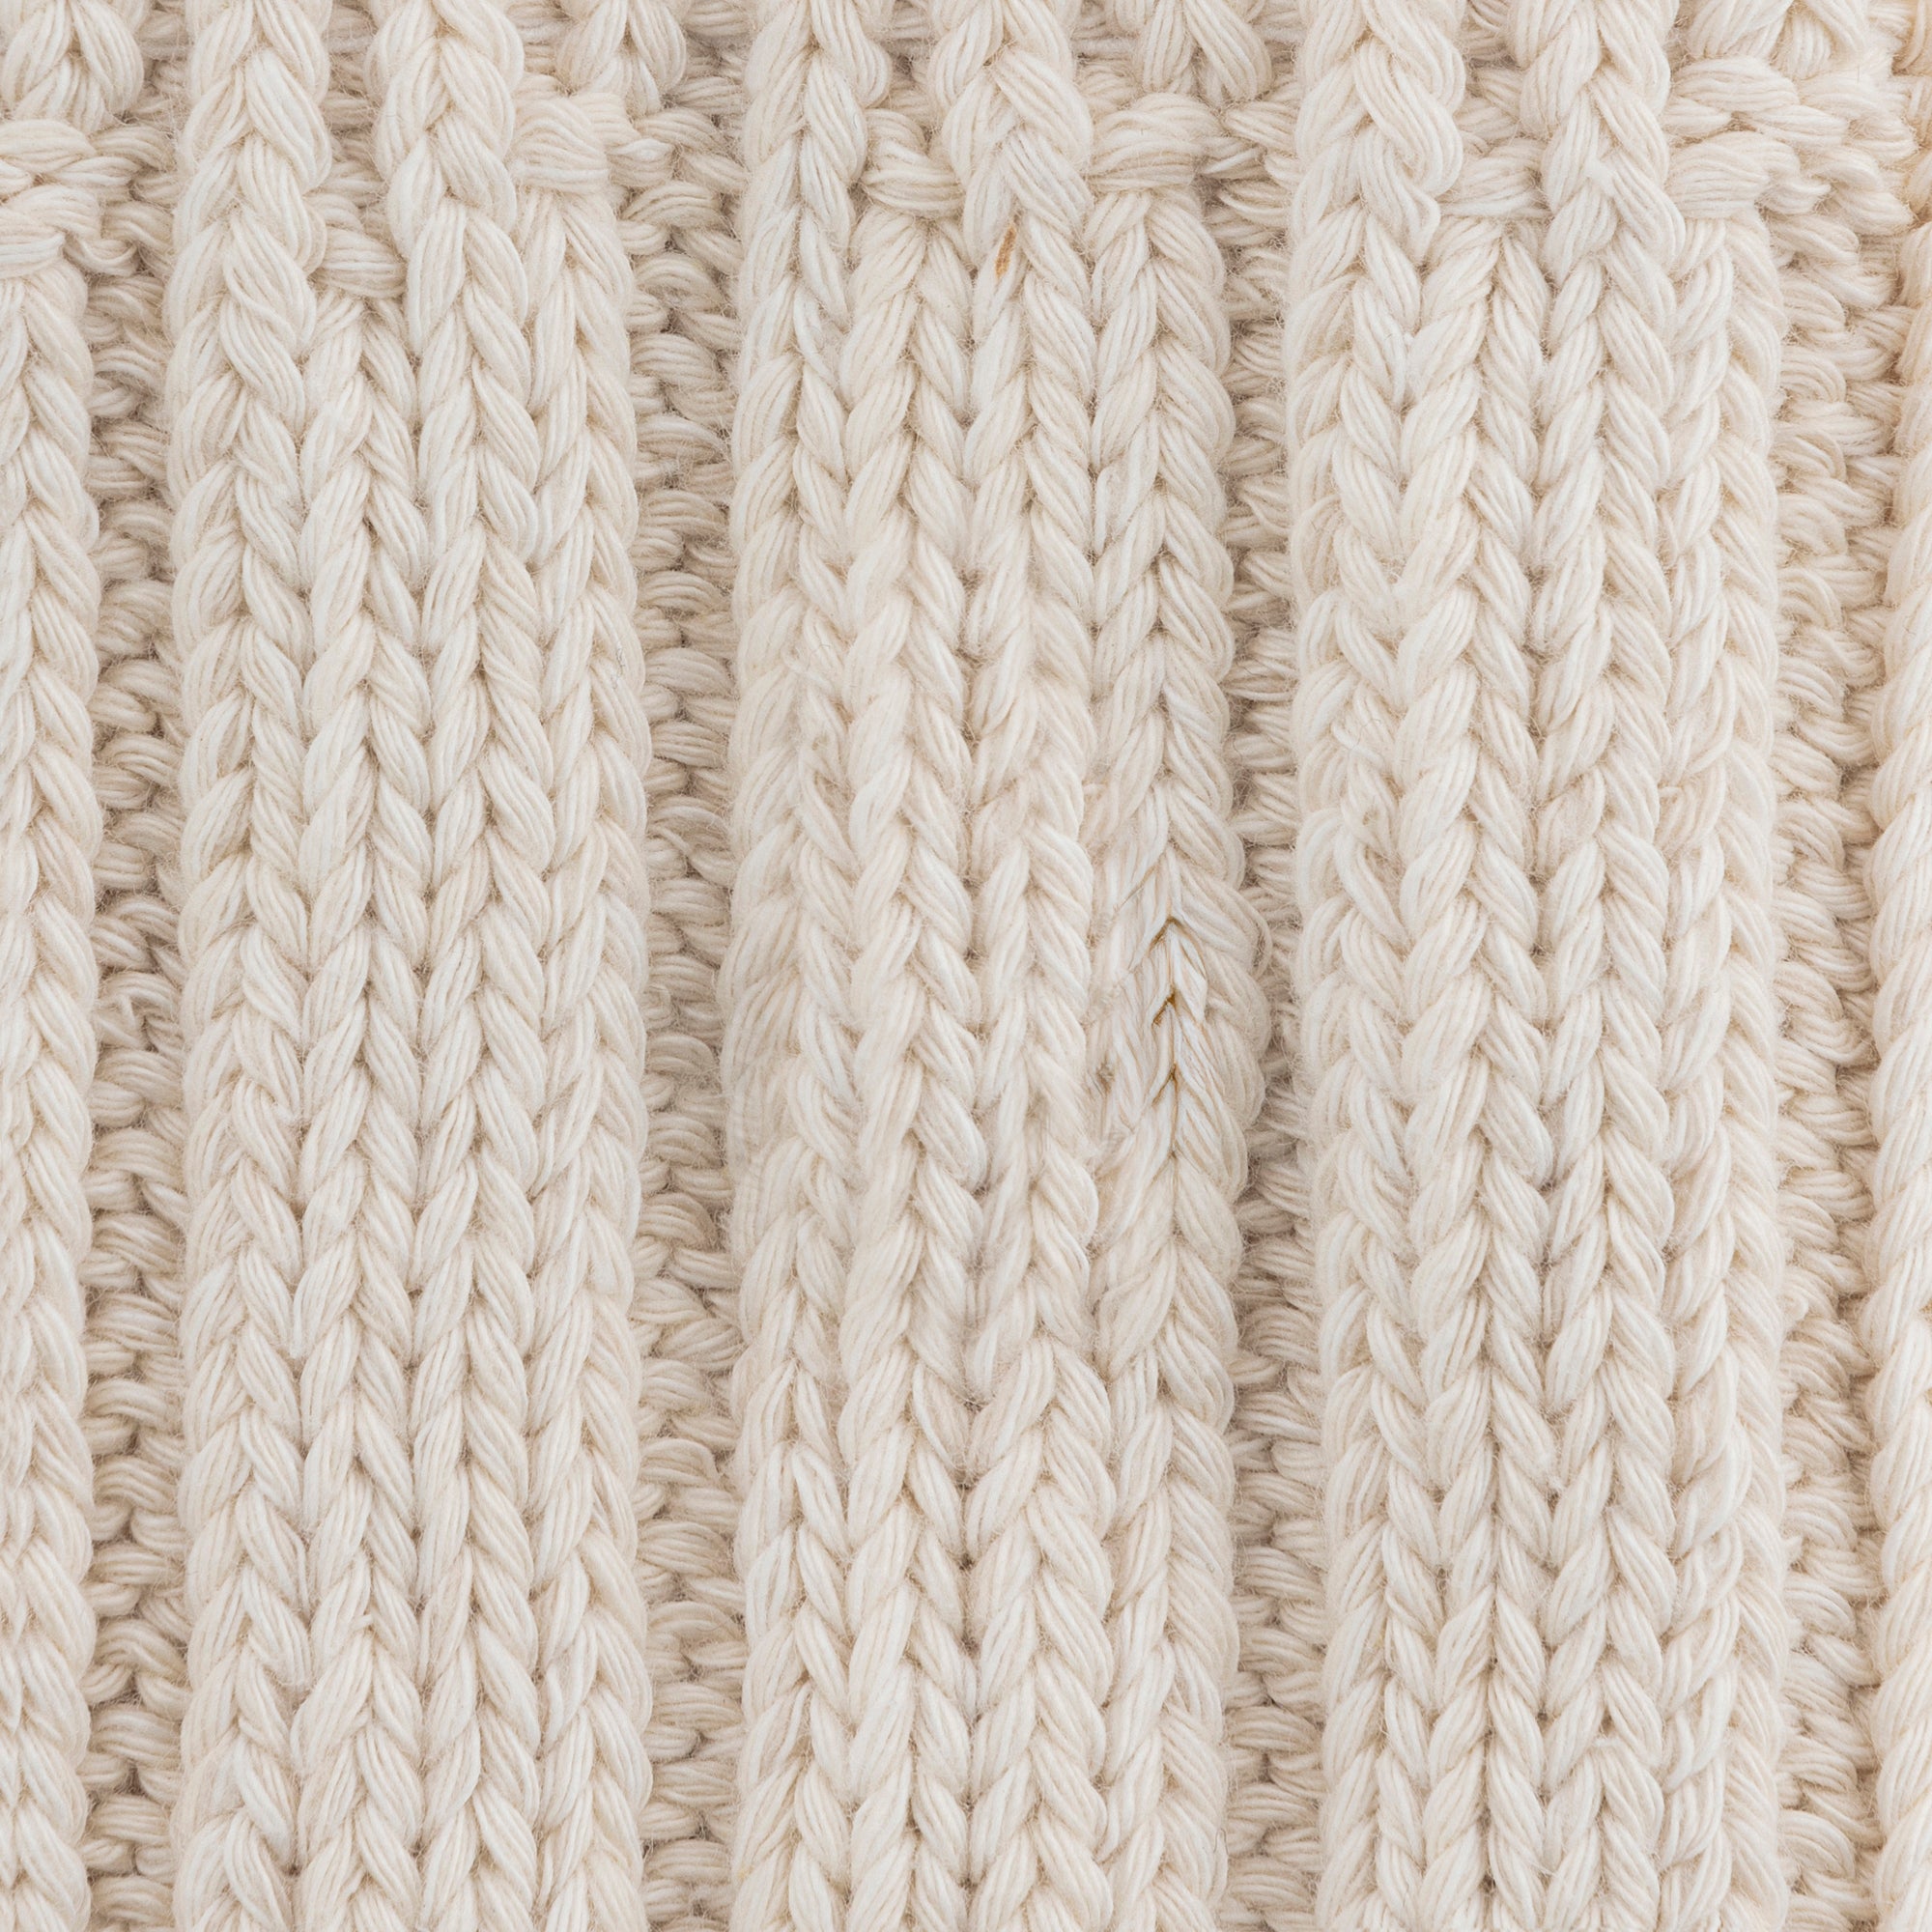 Cotton Twist Socks in Off-White